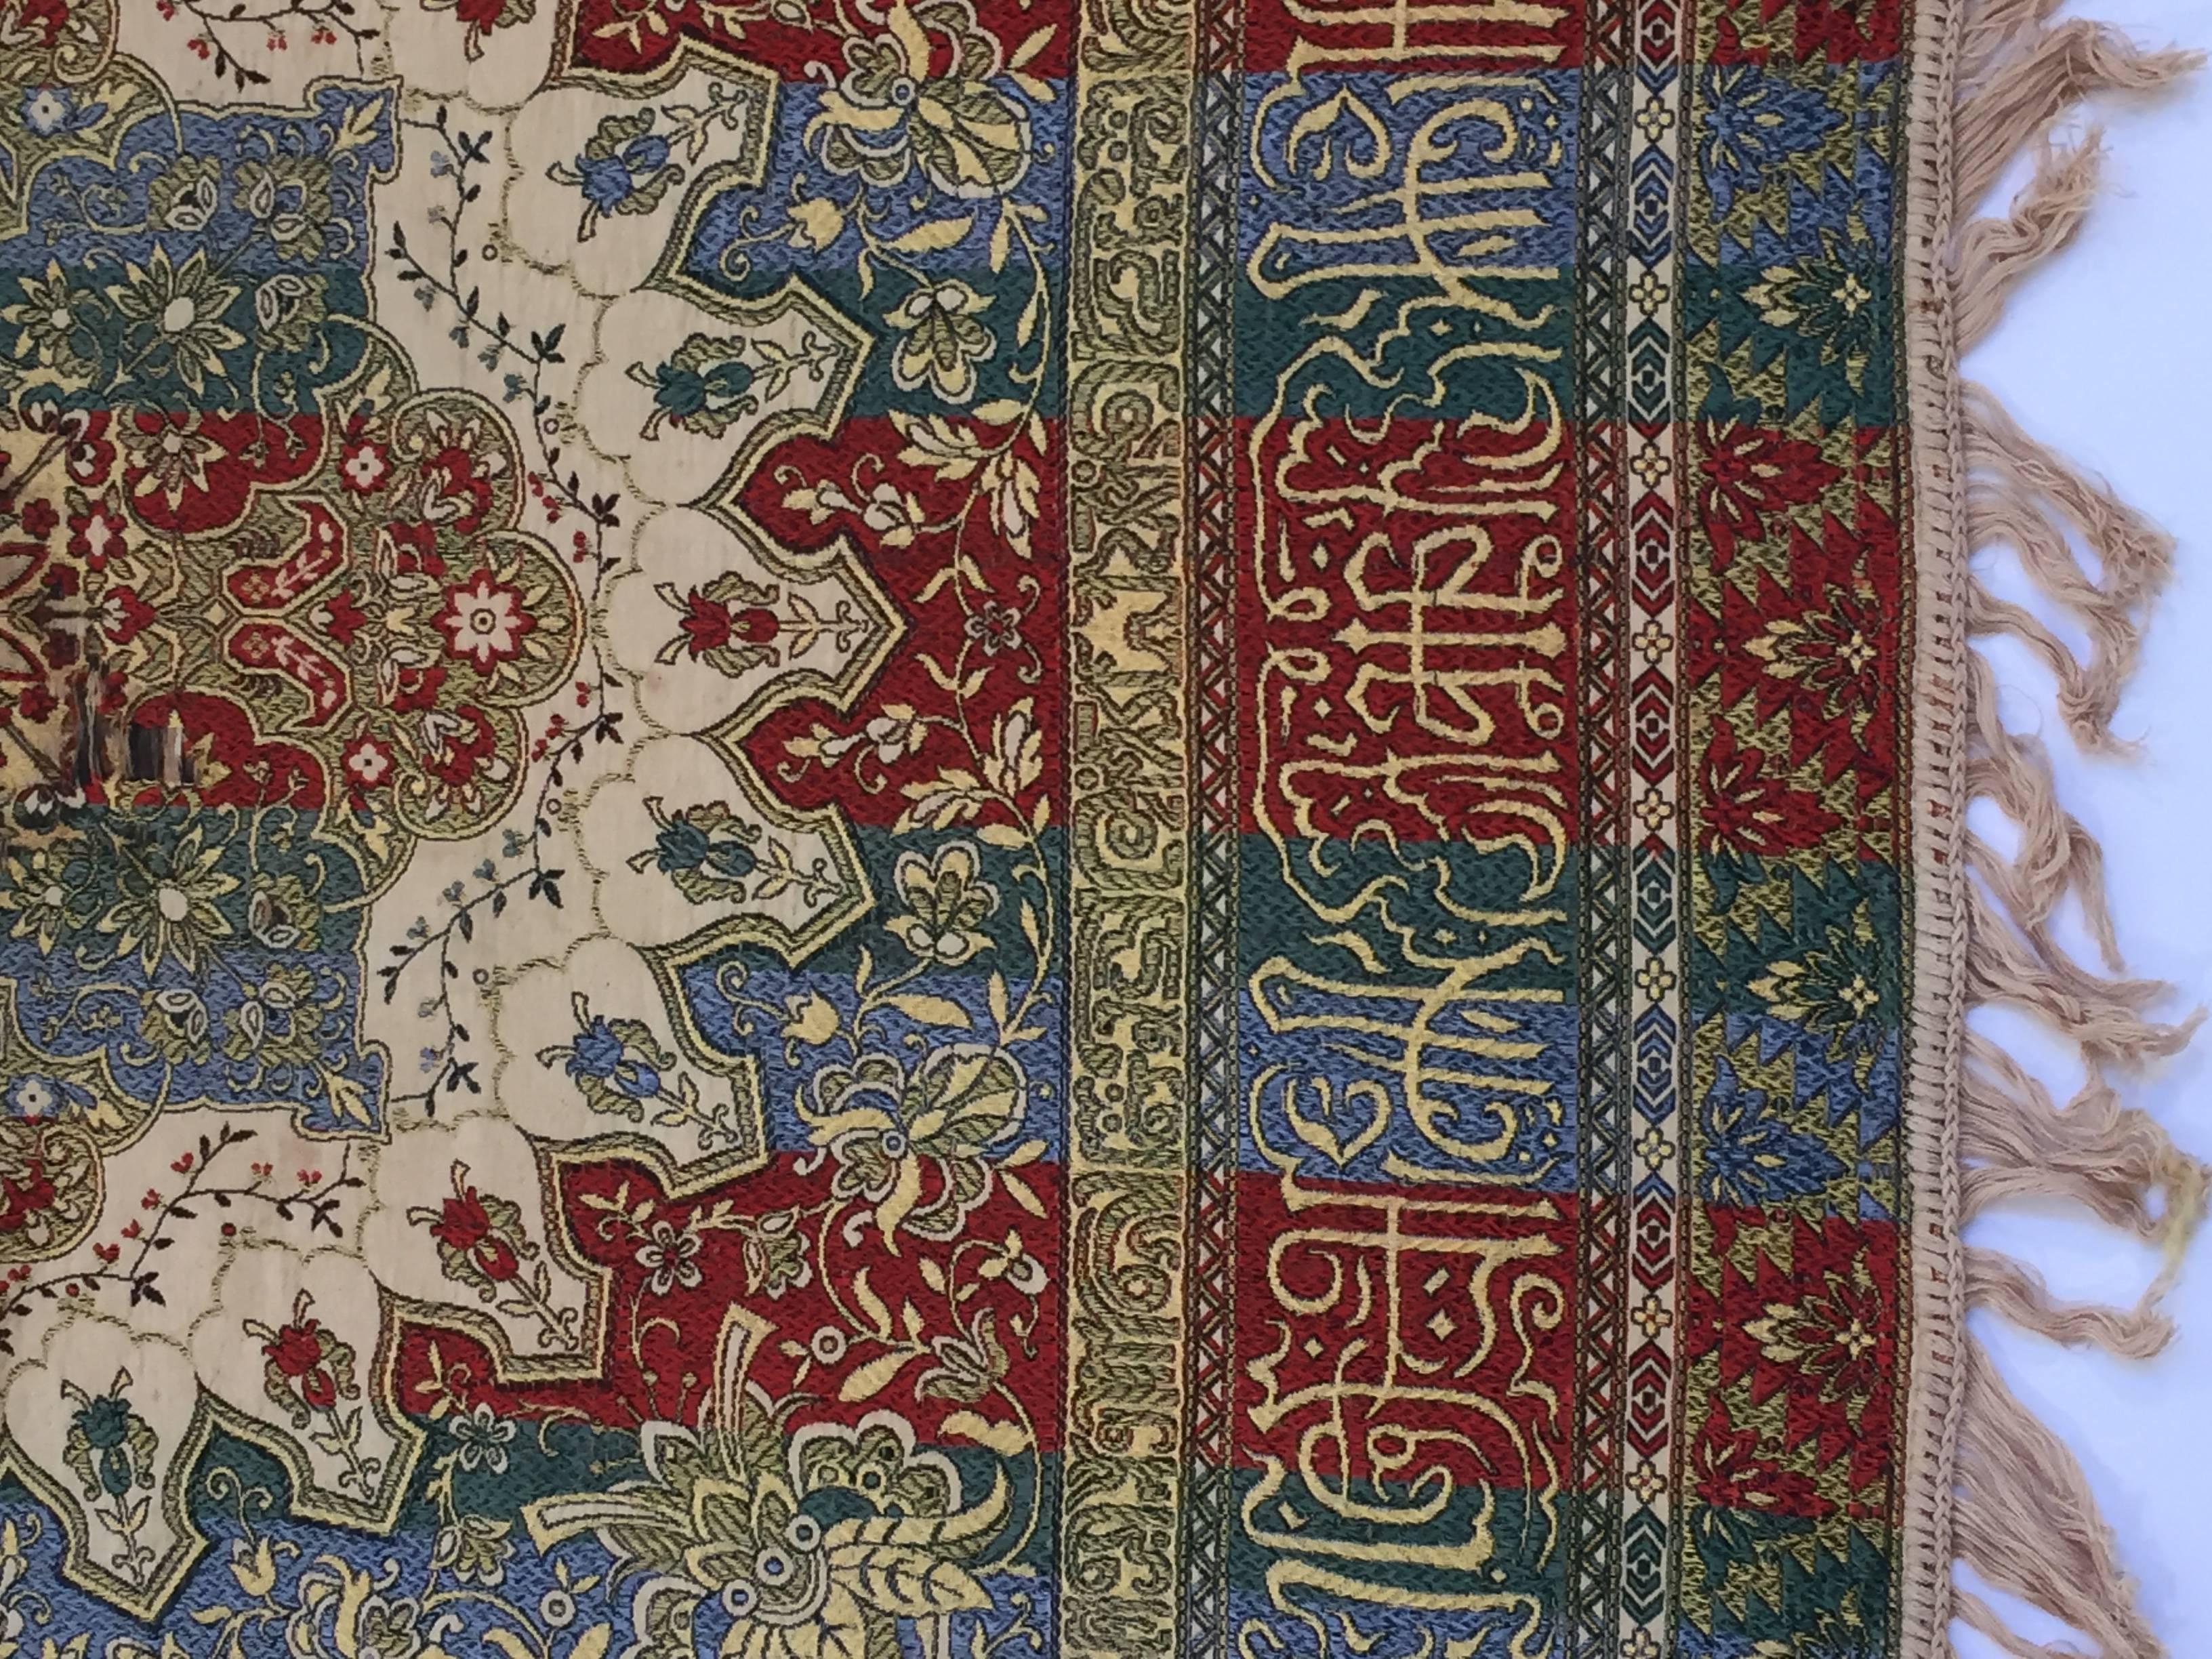 Islamic Spanish Moorish Wall Hanging Tapestry with Arabic Writing